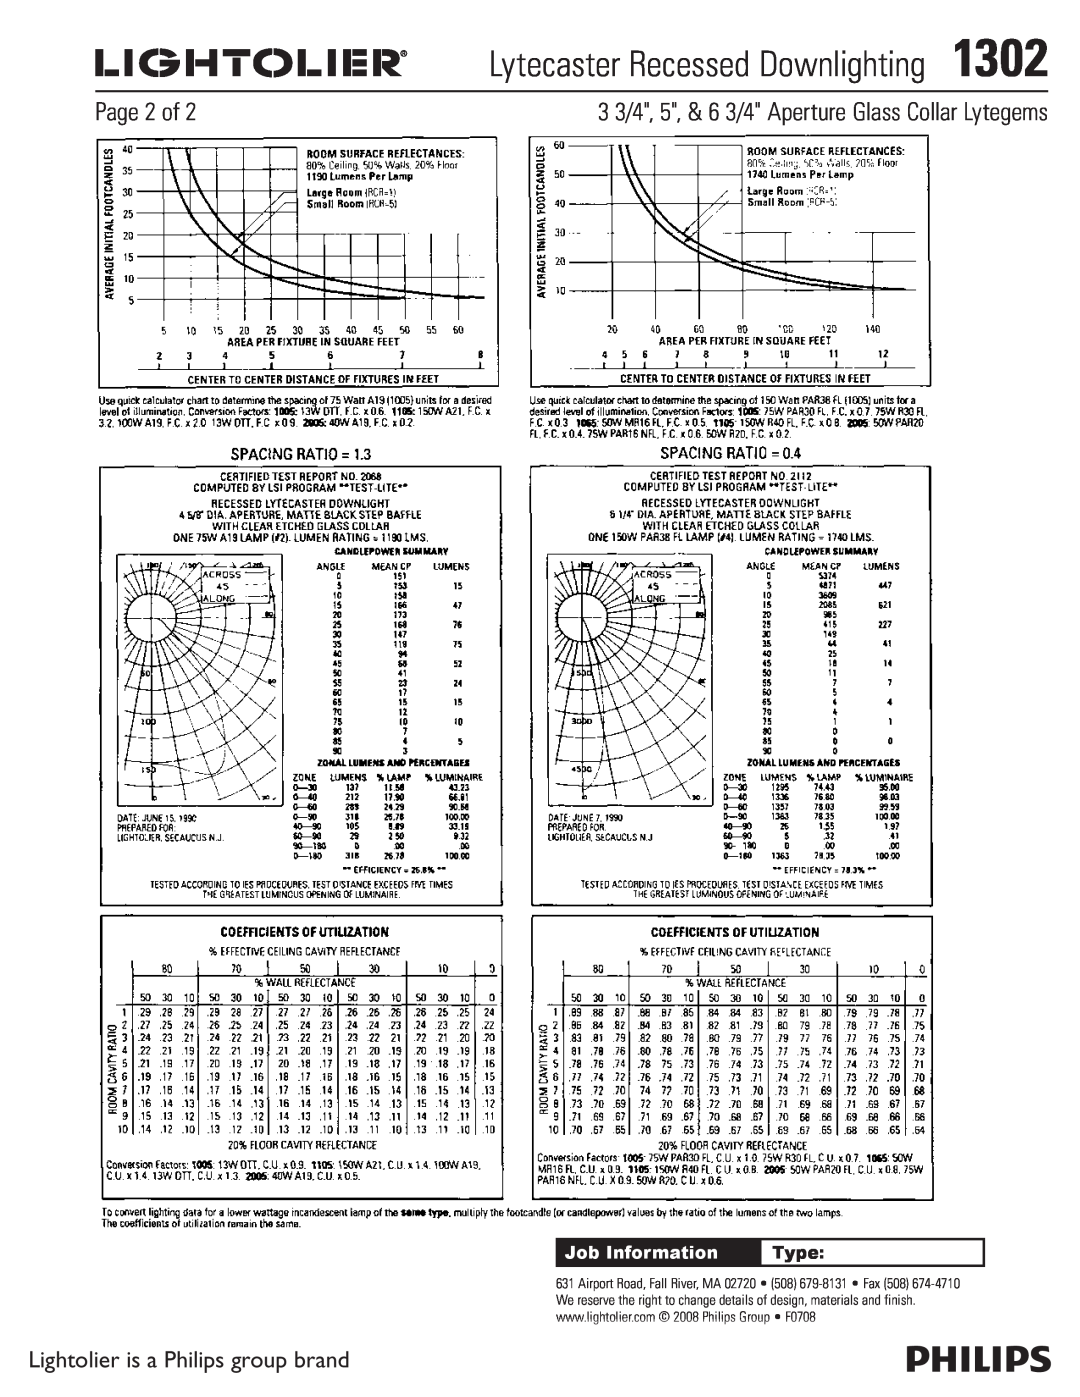 Lightolier Page 2 of, Lytecaster Recessed Downlighting1302, 3 3/4, 5, & 6 3/4 Aperture Glass Collar Lytegems, Type 